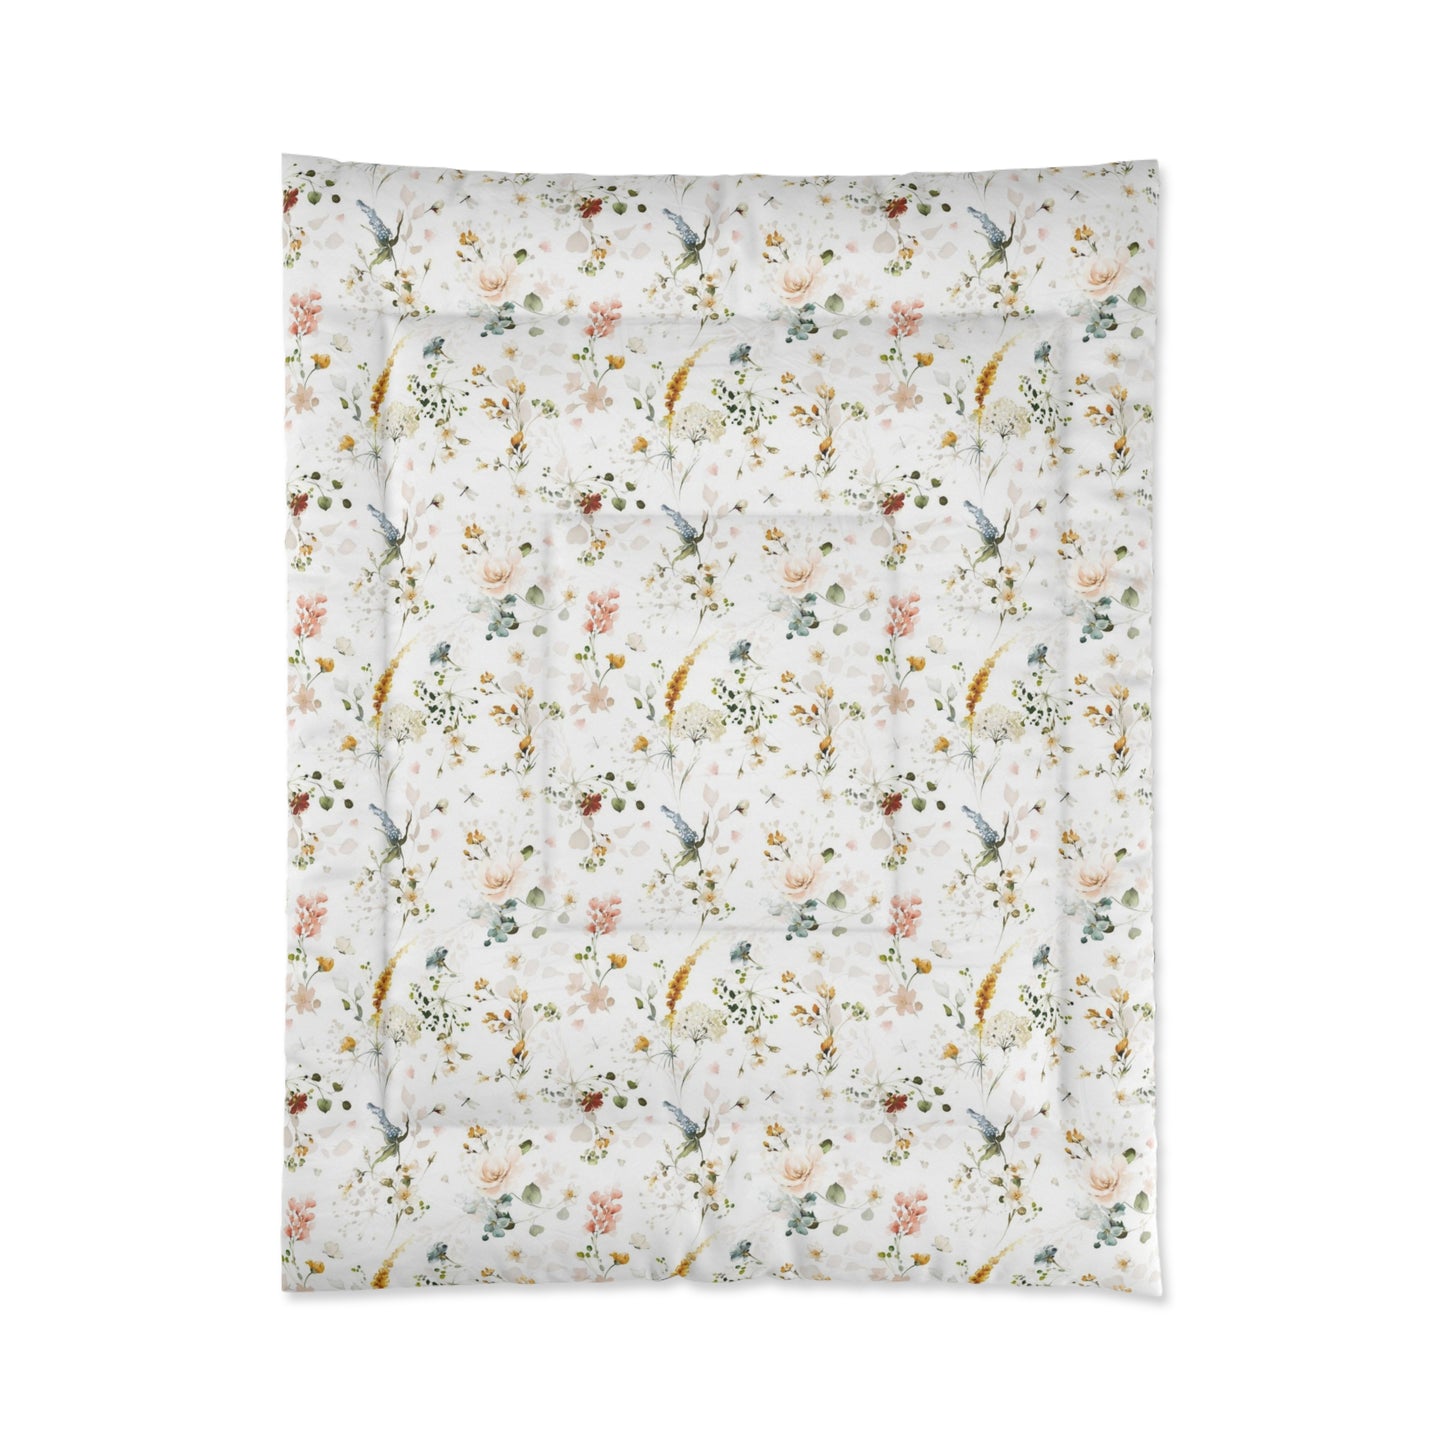 Vintage floral comforter, Wildflower nursery bedding - Vintage garden